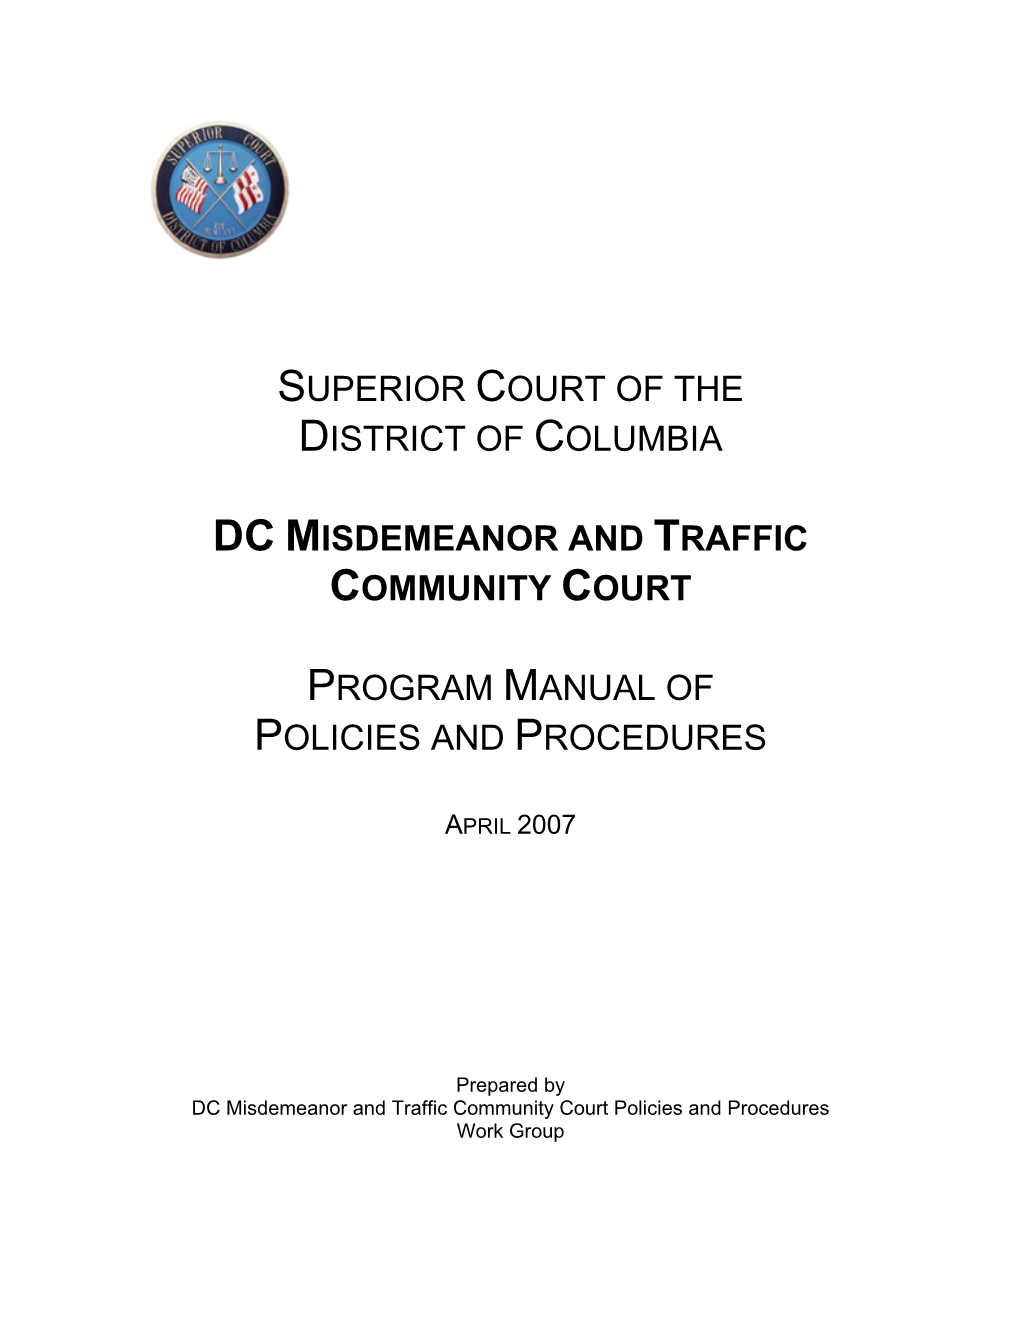 DC Misdemeanor and Traffic Community Court Procedures